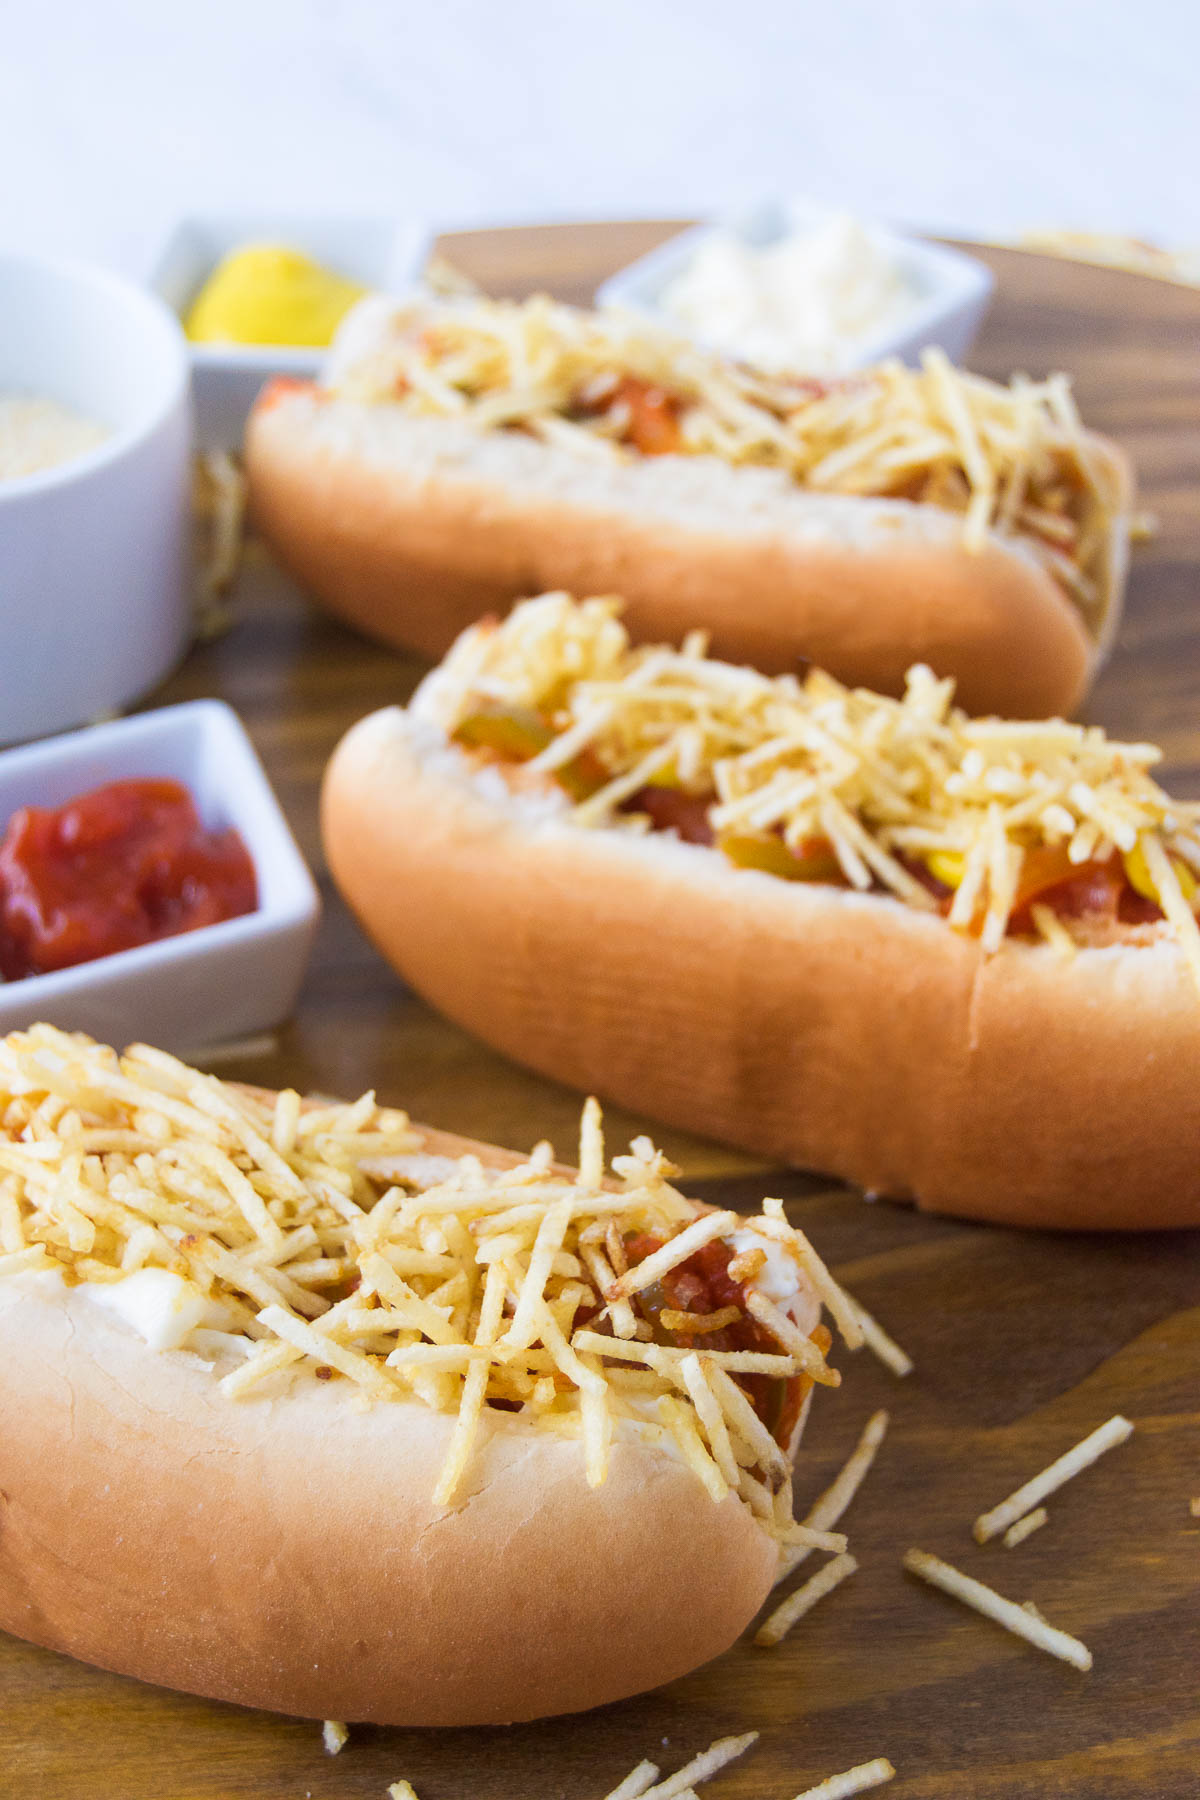 Cachorro Quente Brasileiro Brazilian Hot Dog Recipe 